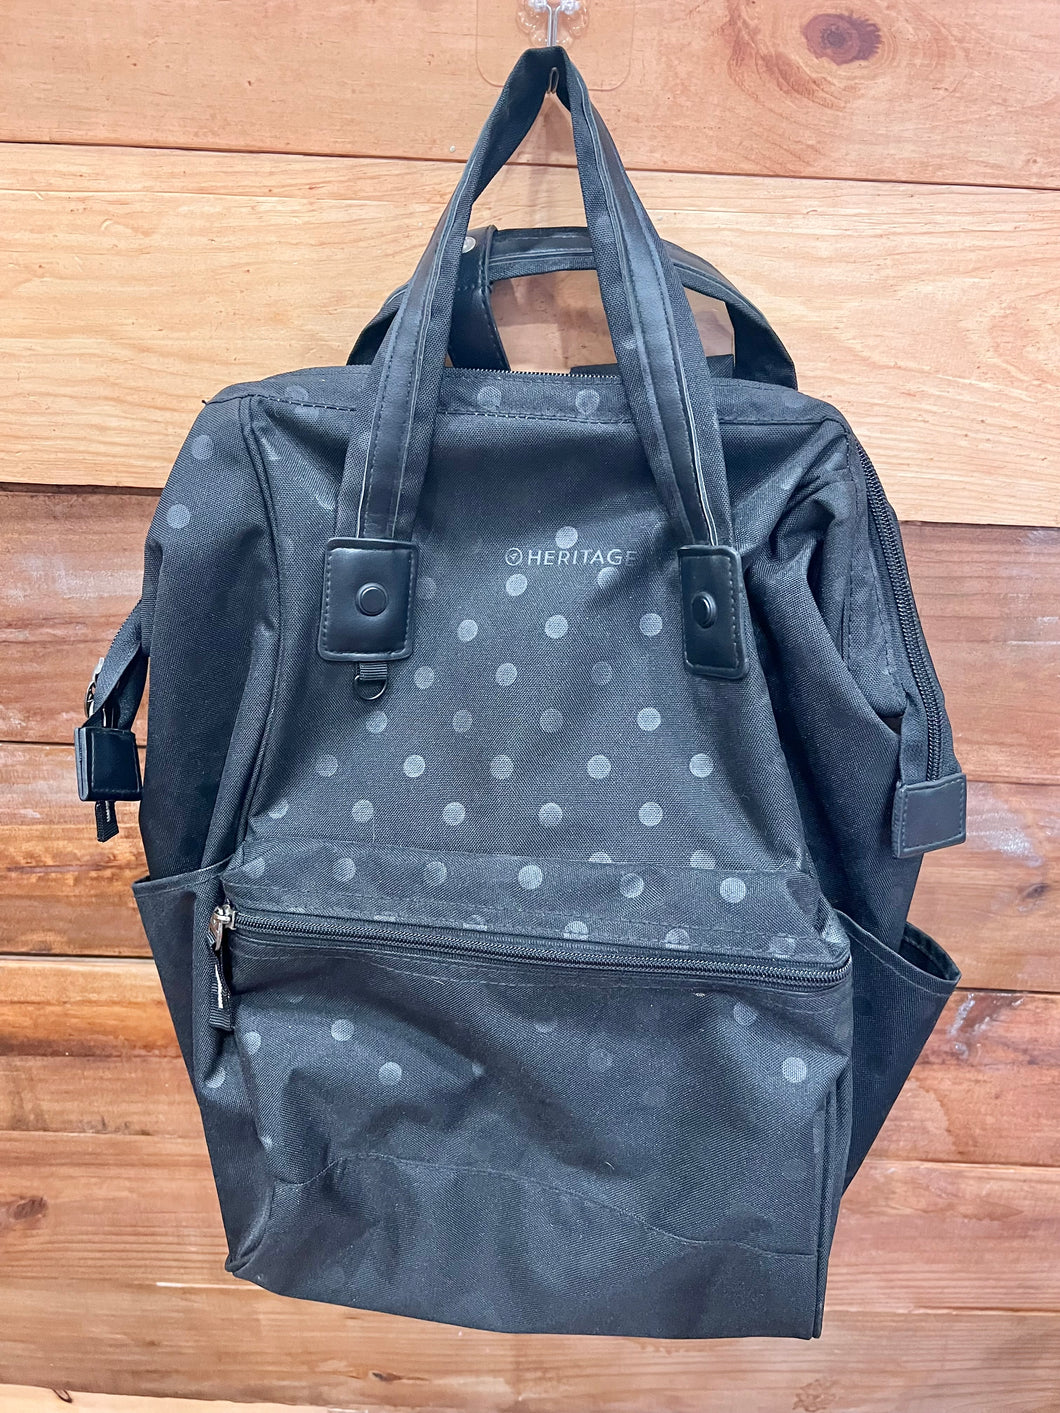 Heritage Black Diaper Bag Backpack